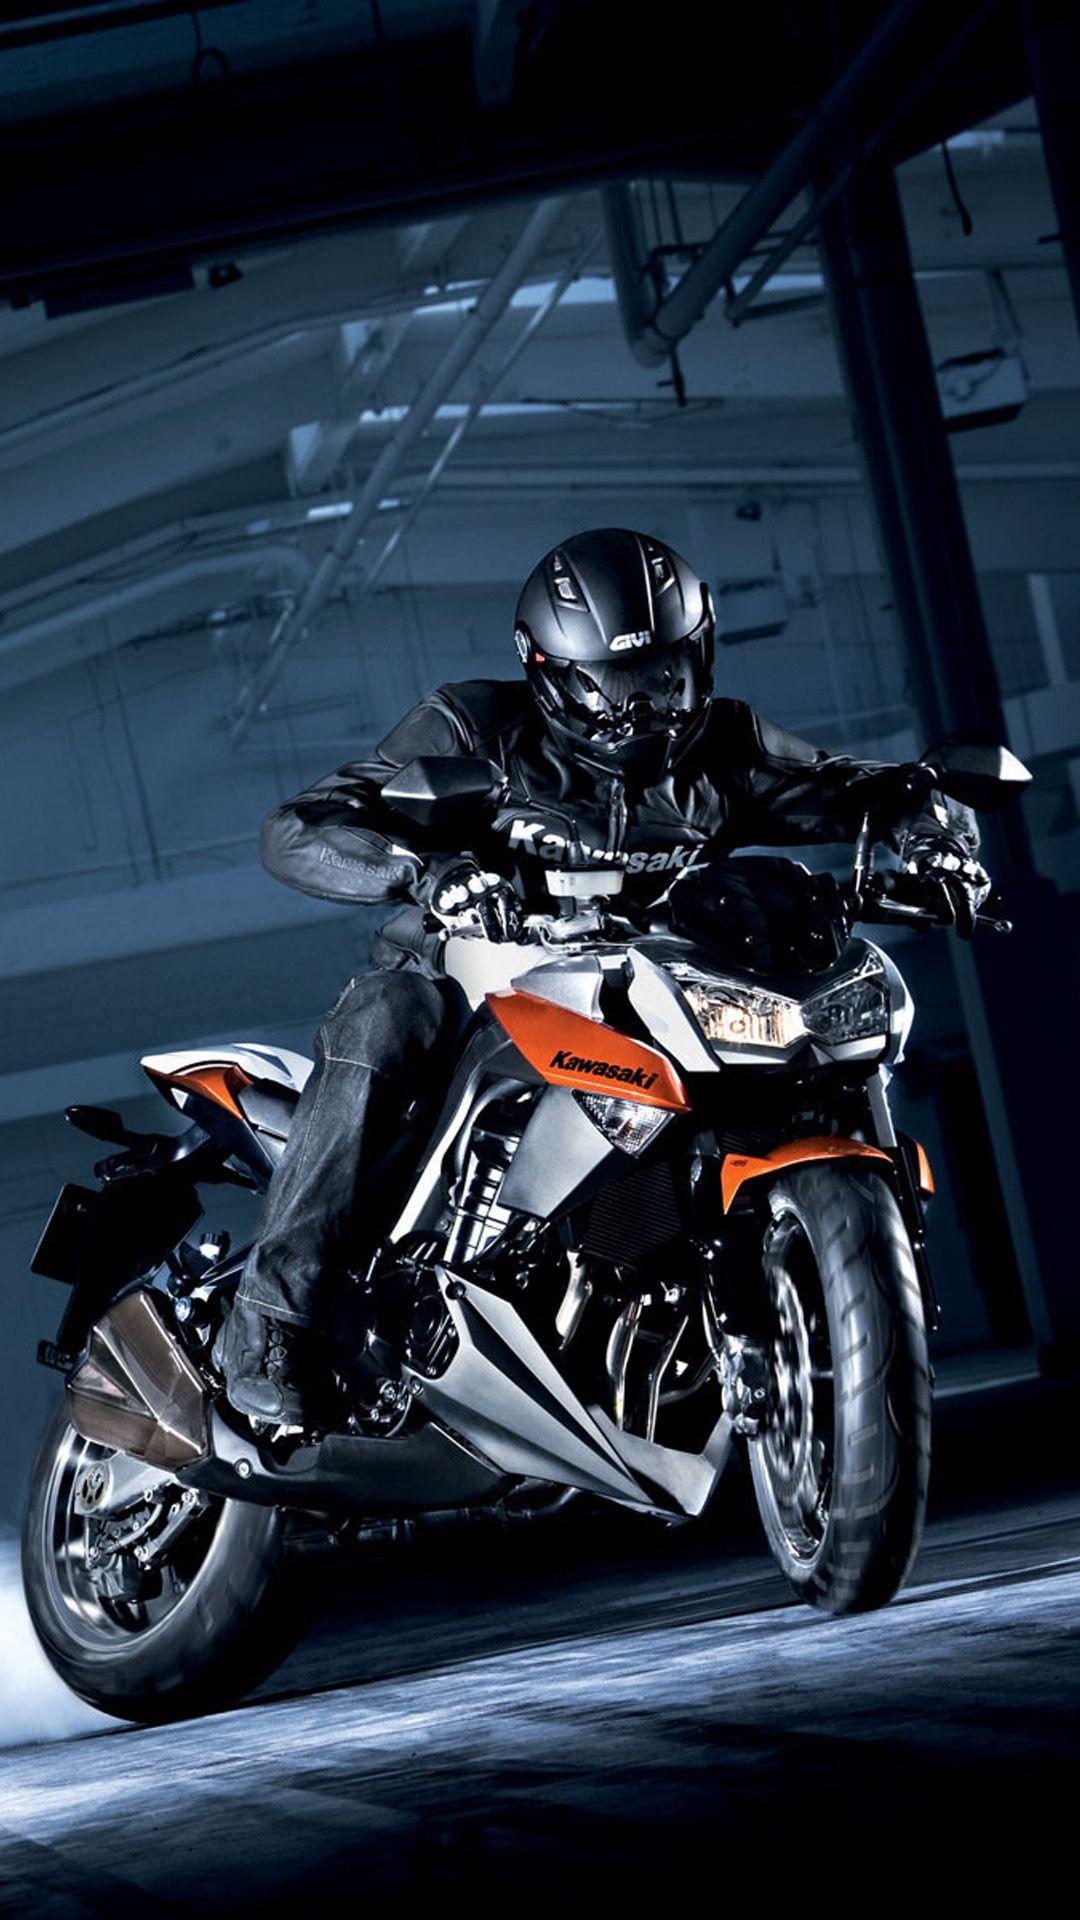 Phone HD Wallpaper. Motorcycle wallpaper, Super bikes, HD motorcycles